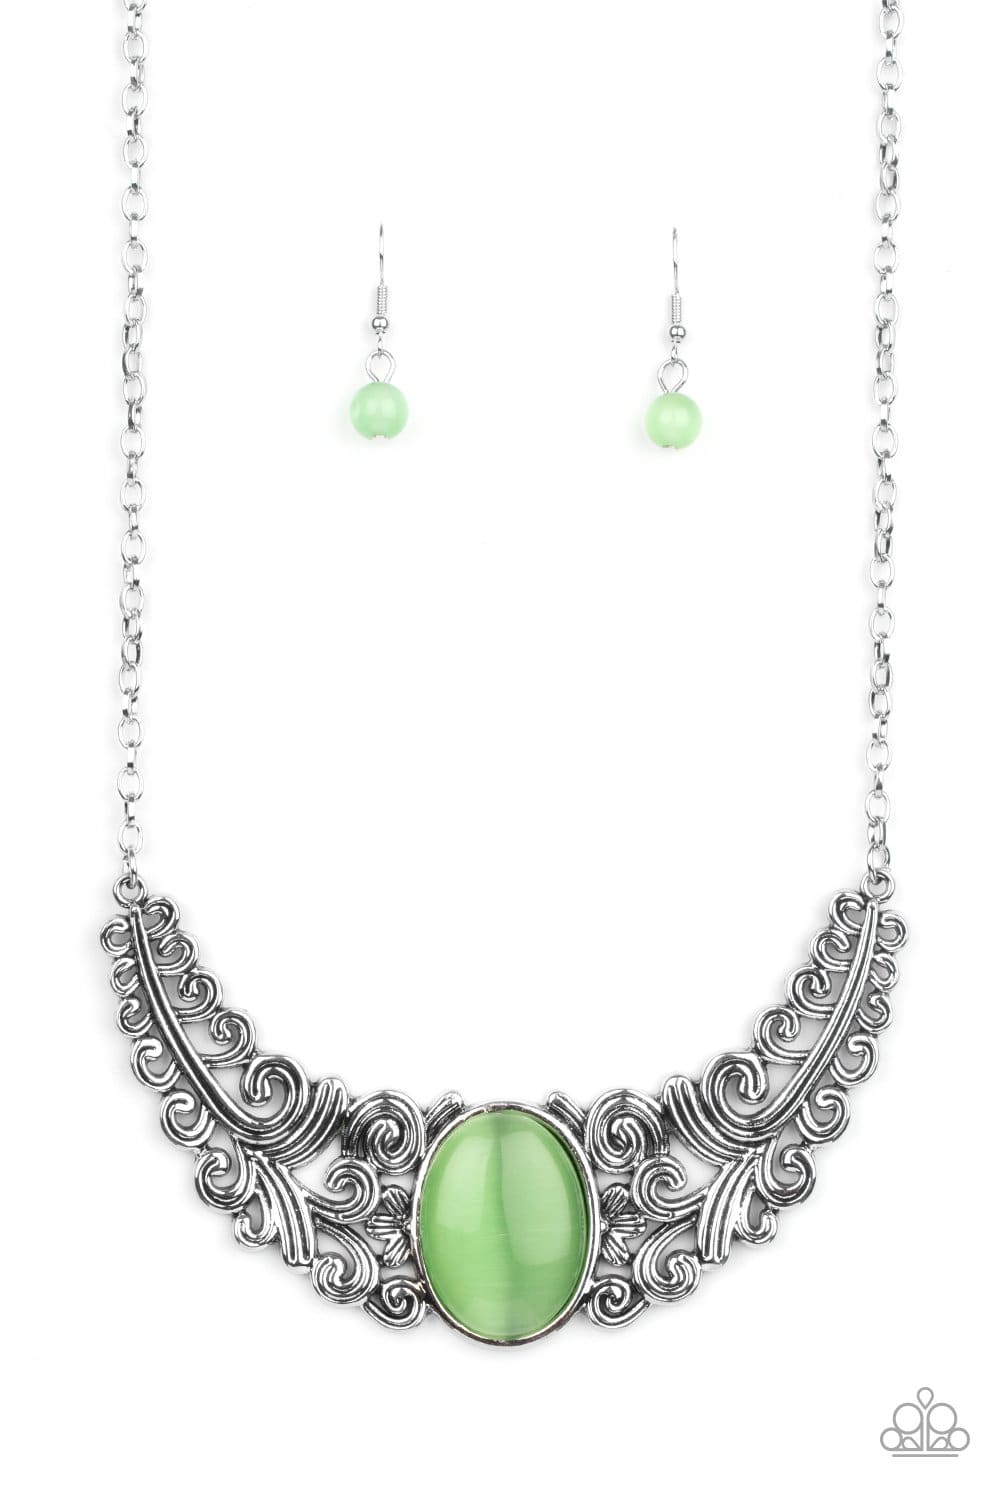 Celestial Eden - Green Cat's Eye Necklace - Paparazzi Accessories - GlaMarous Titi Jewels